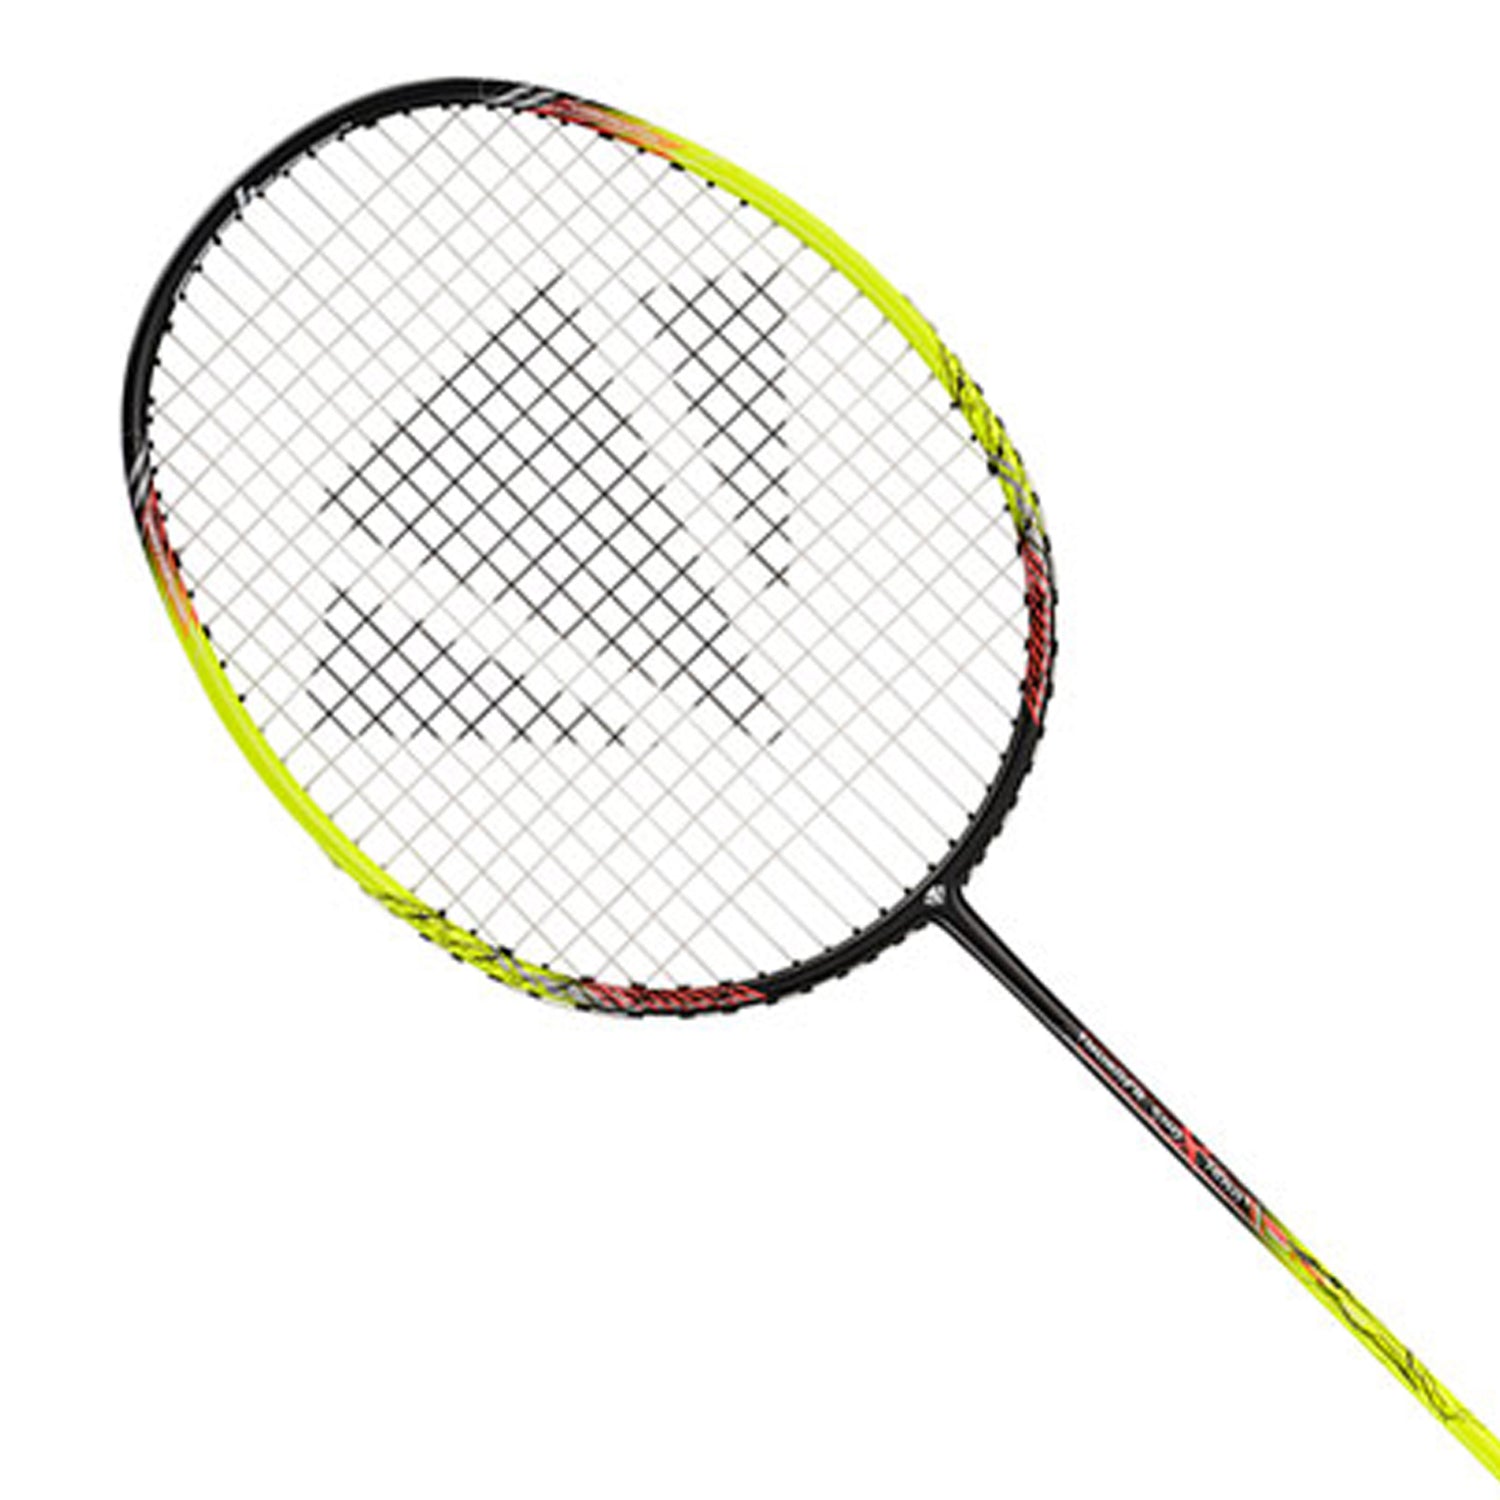 Carlton Thunder Shox 1500 Badminton Racquet, Lime - Best Price online Prokicksports.com